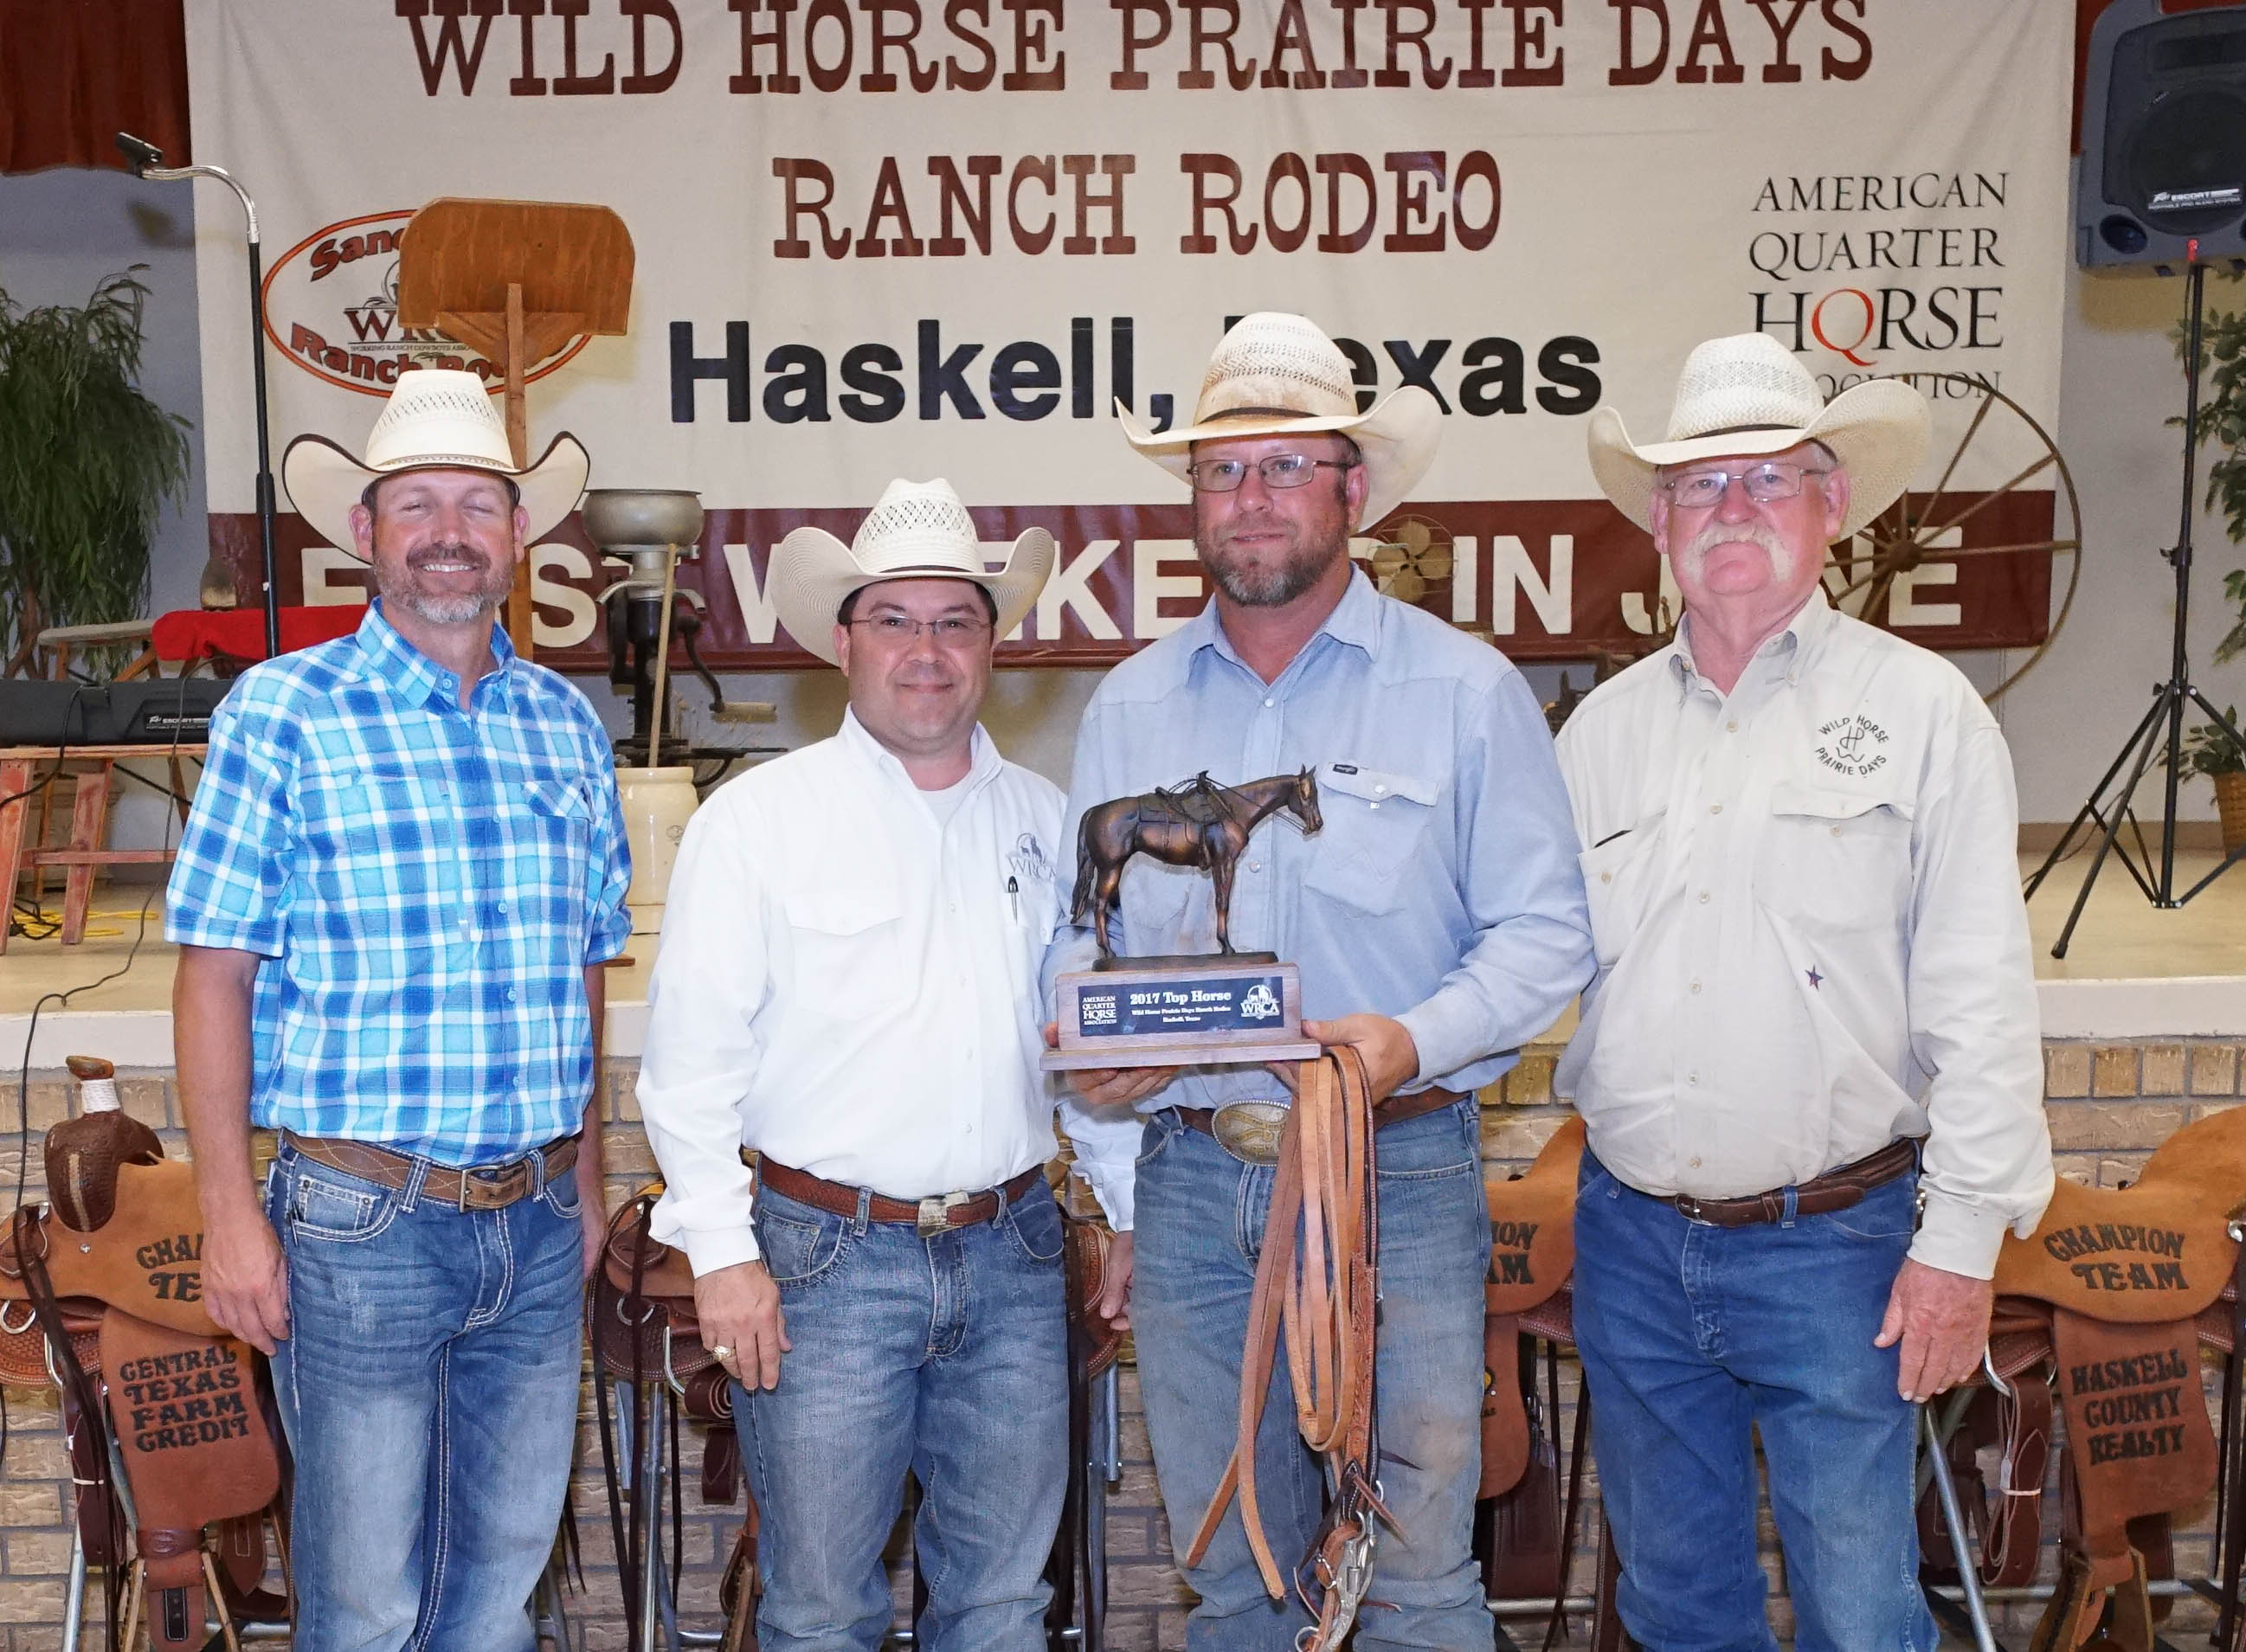 2017 Wild Horse Prairie Days Official Results Top Horse Winner